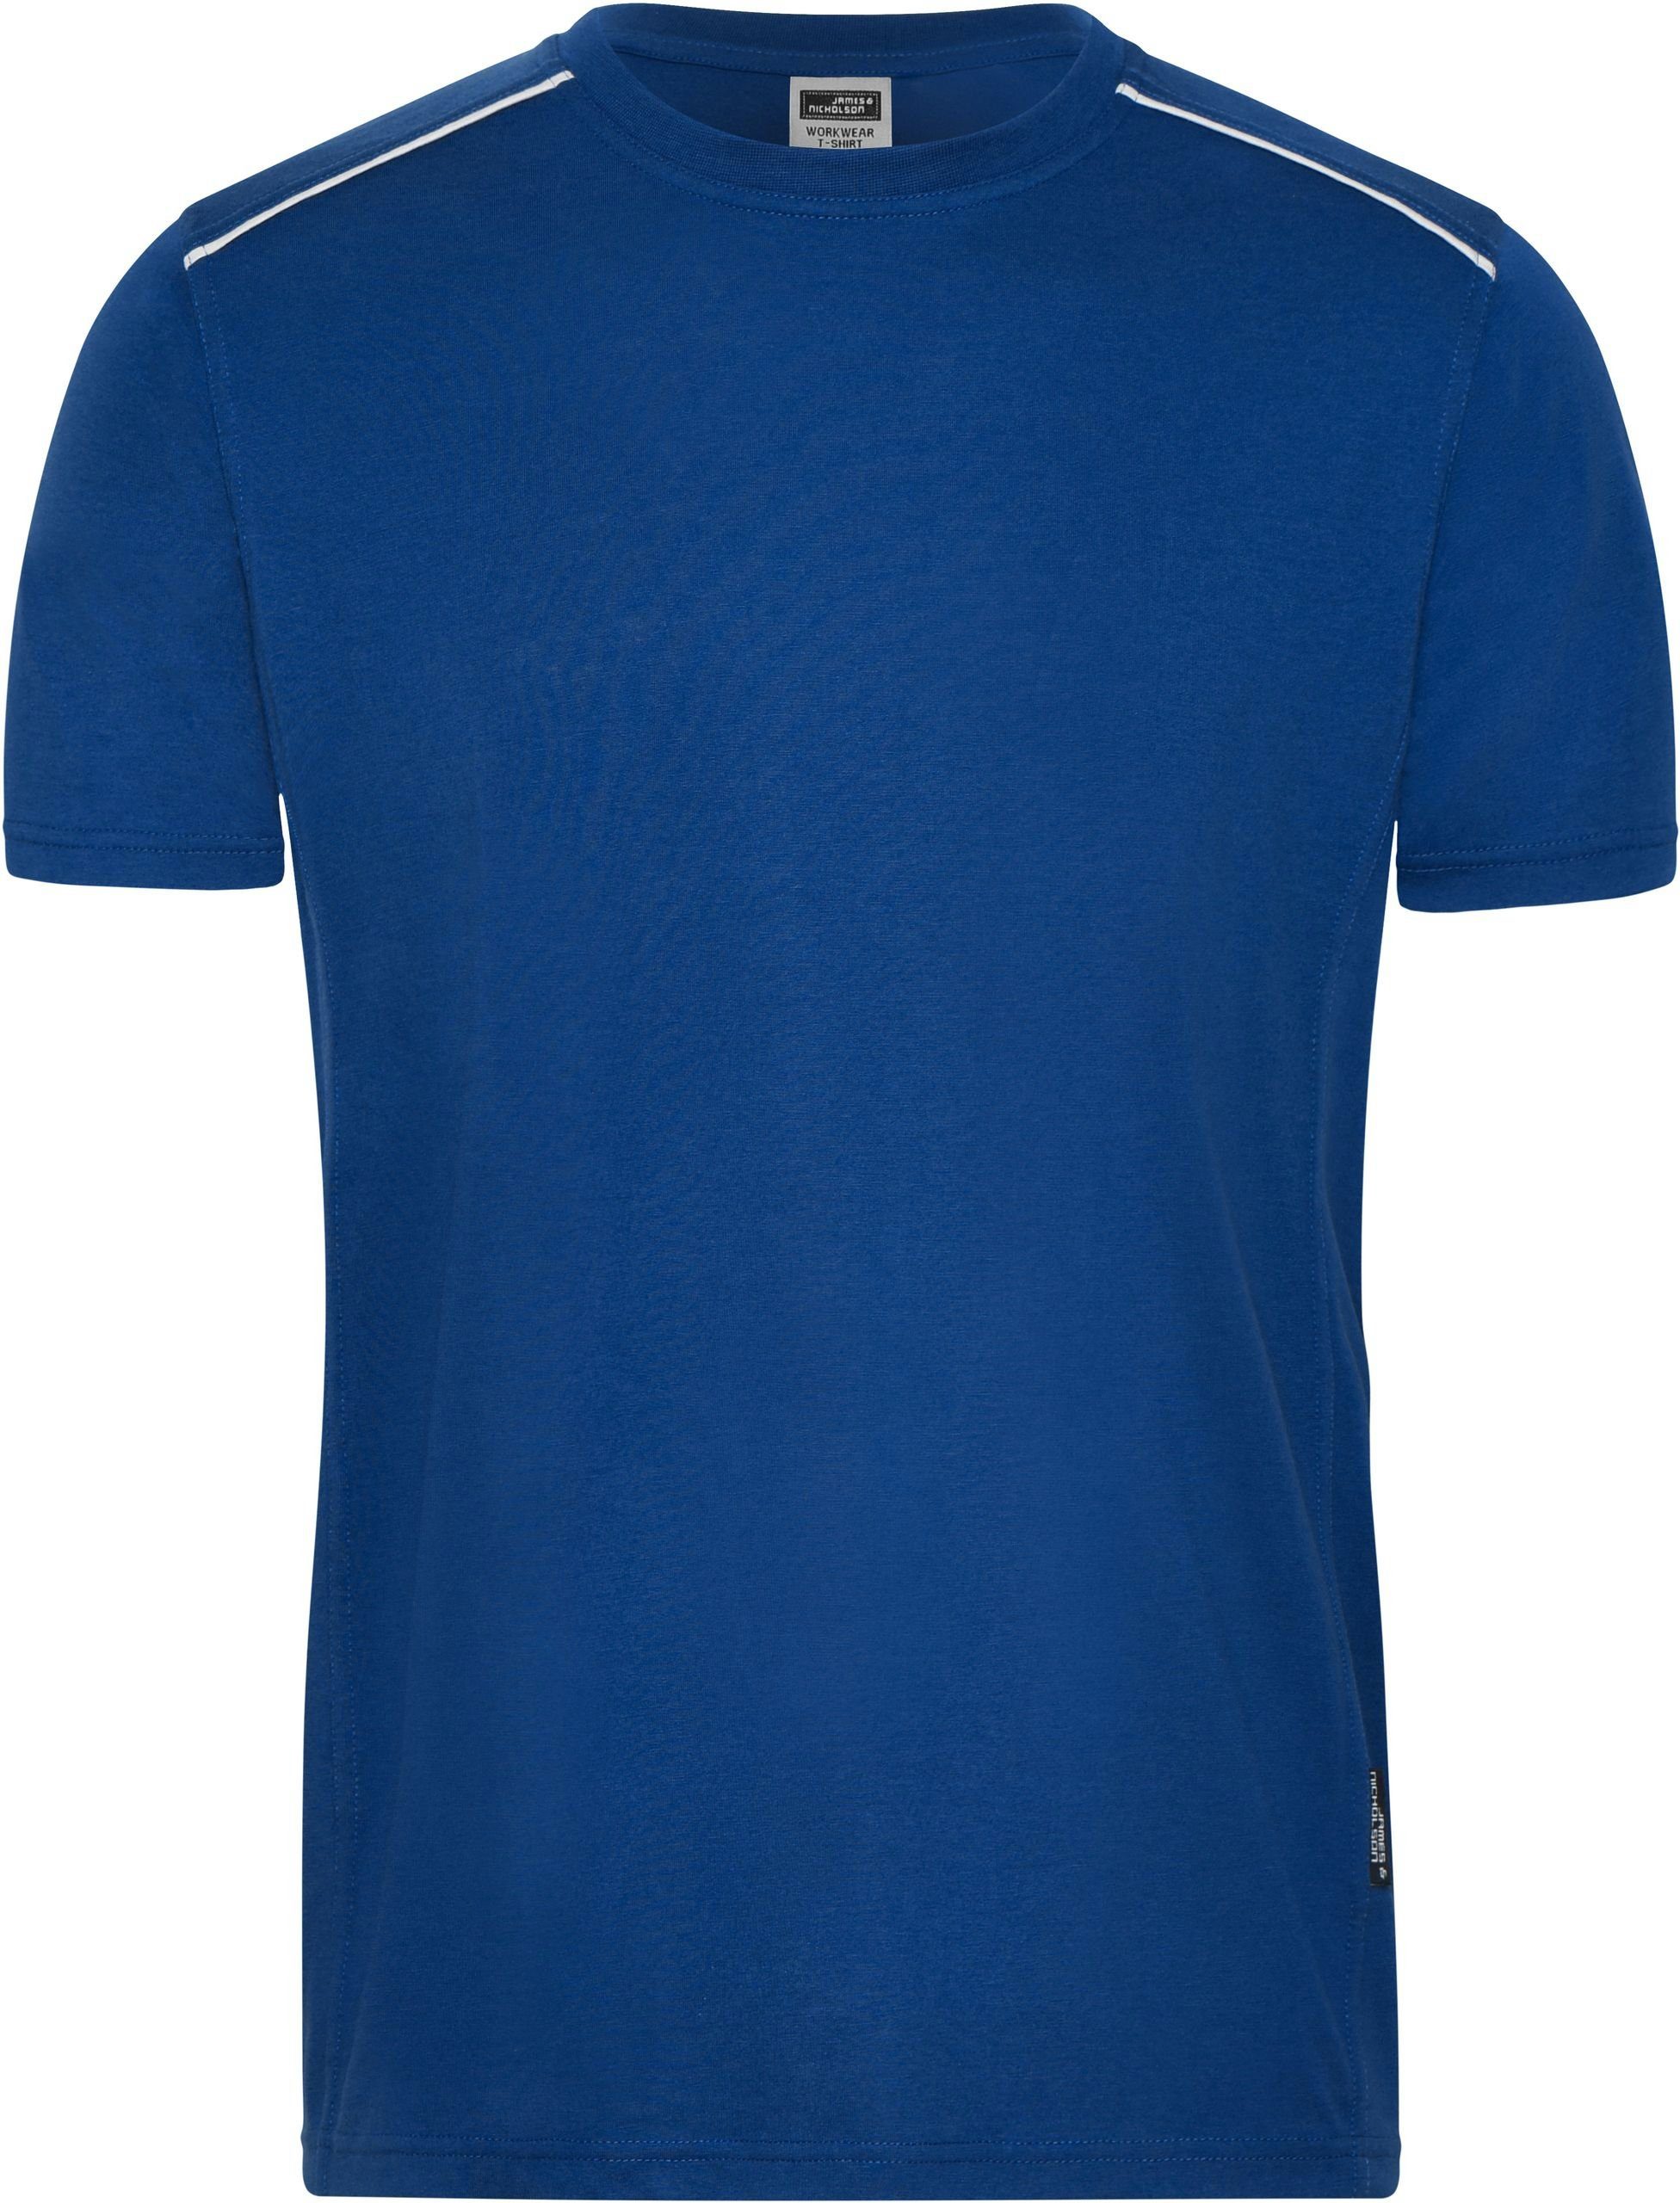 Nicholson -Solid- James T-Shirt T-Shirt Carbon Workwear Arbeits & Baumwolle Bio FaS50890